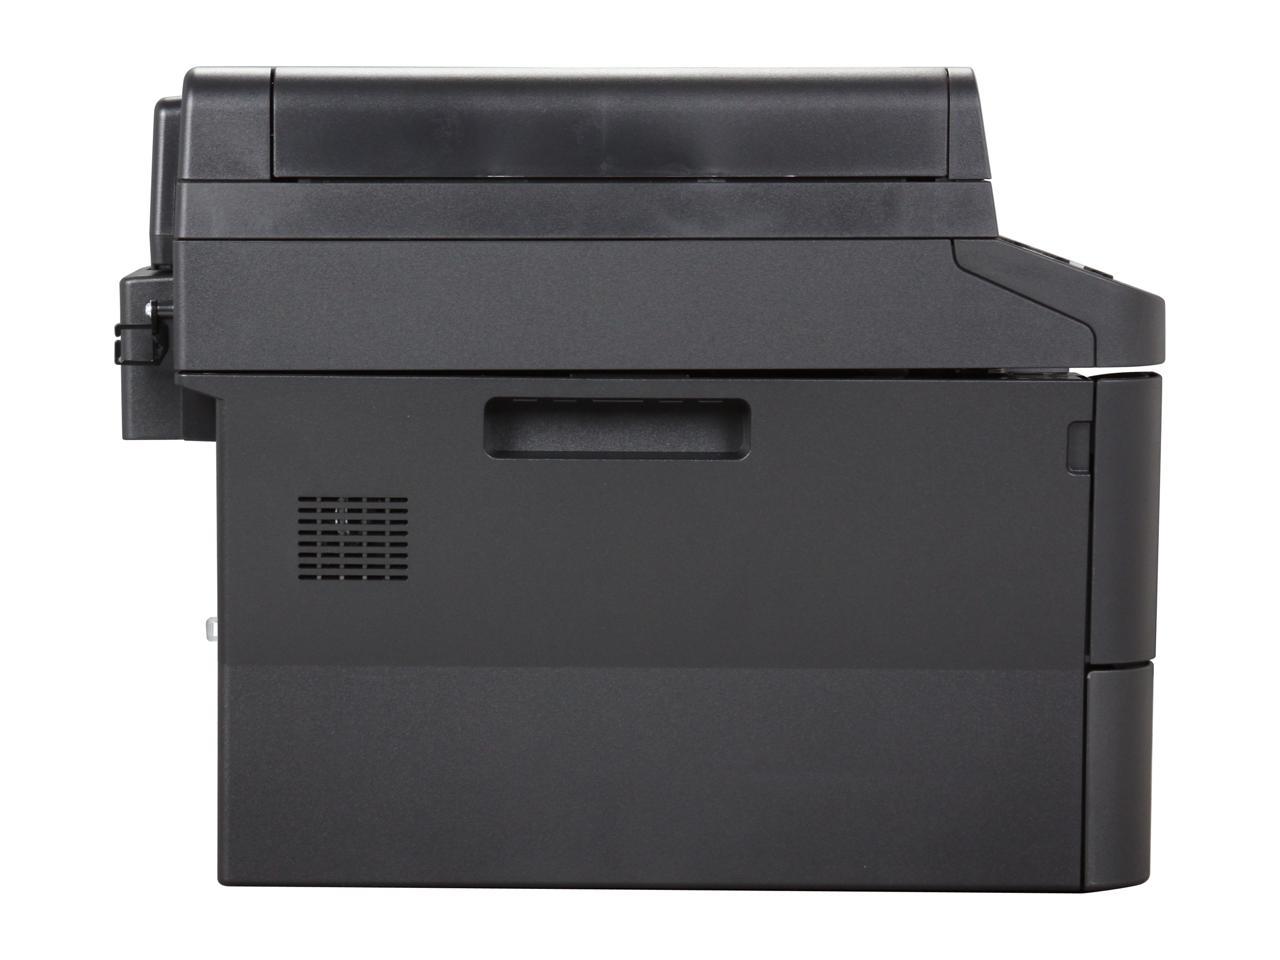 Brother MFC-7460DN Monochrome Multifunction Laser Printer